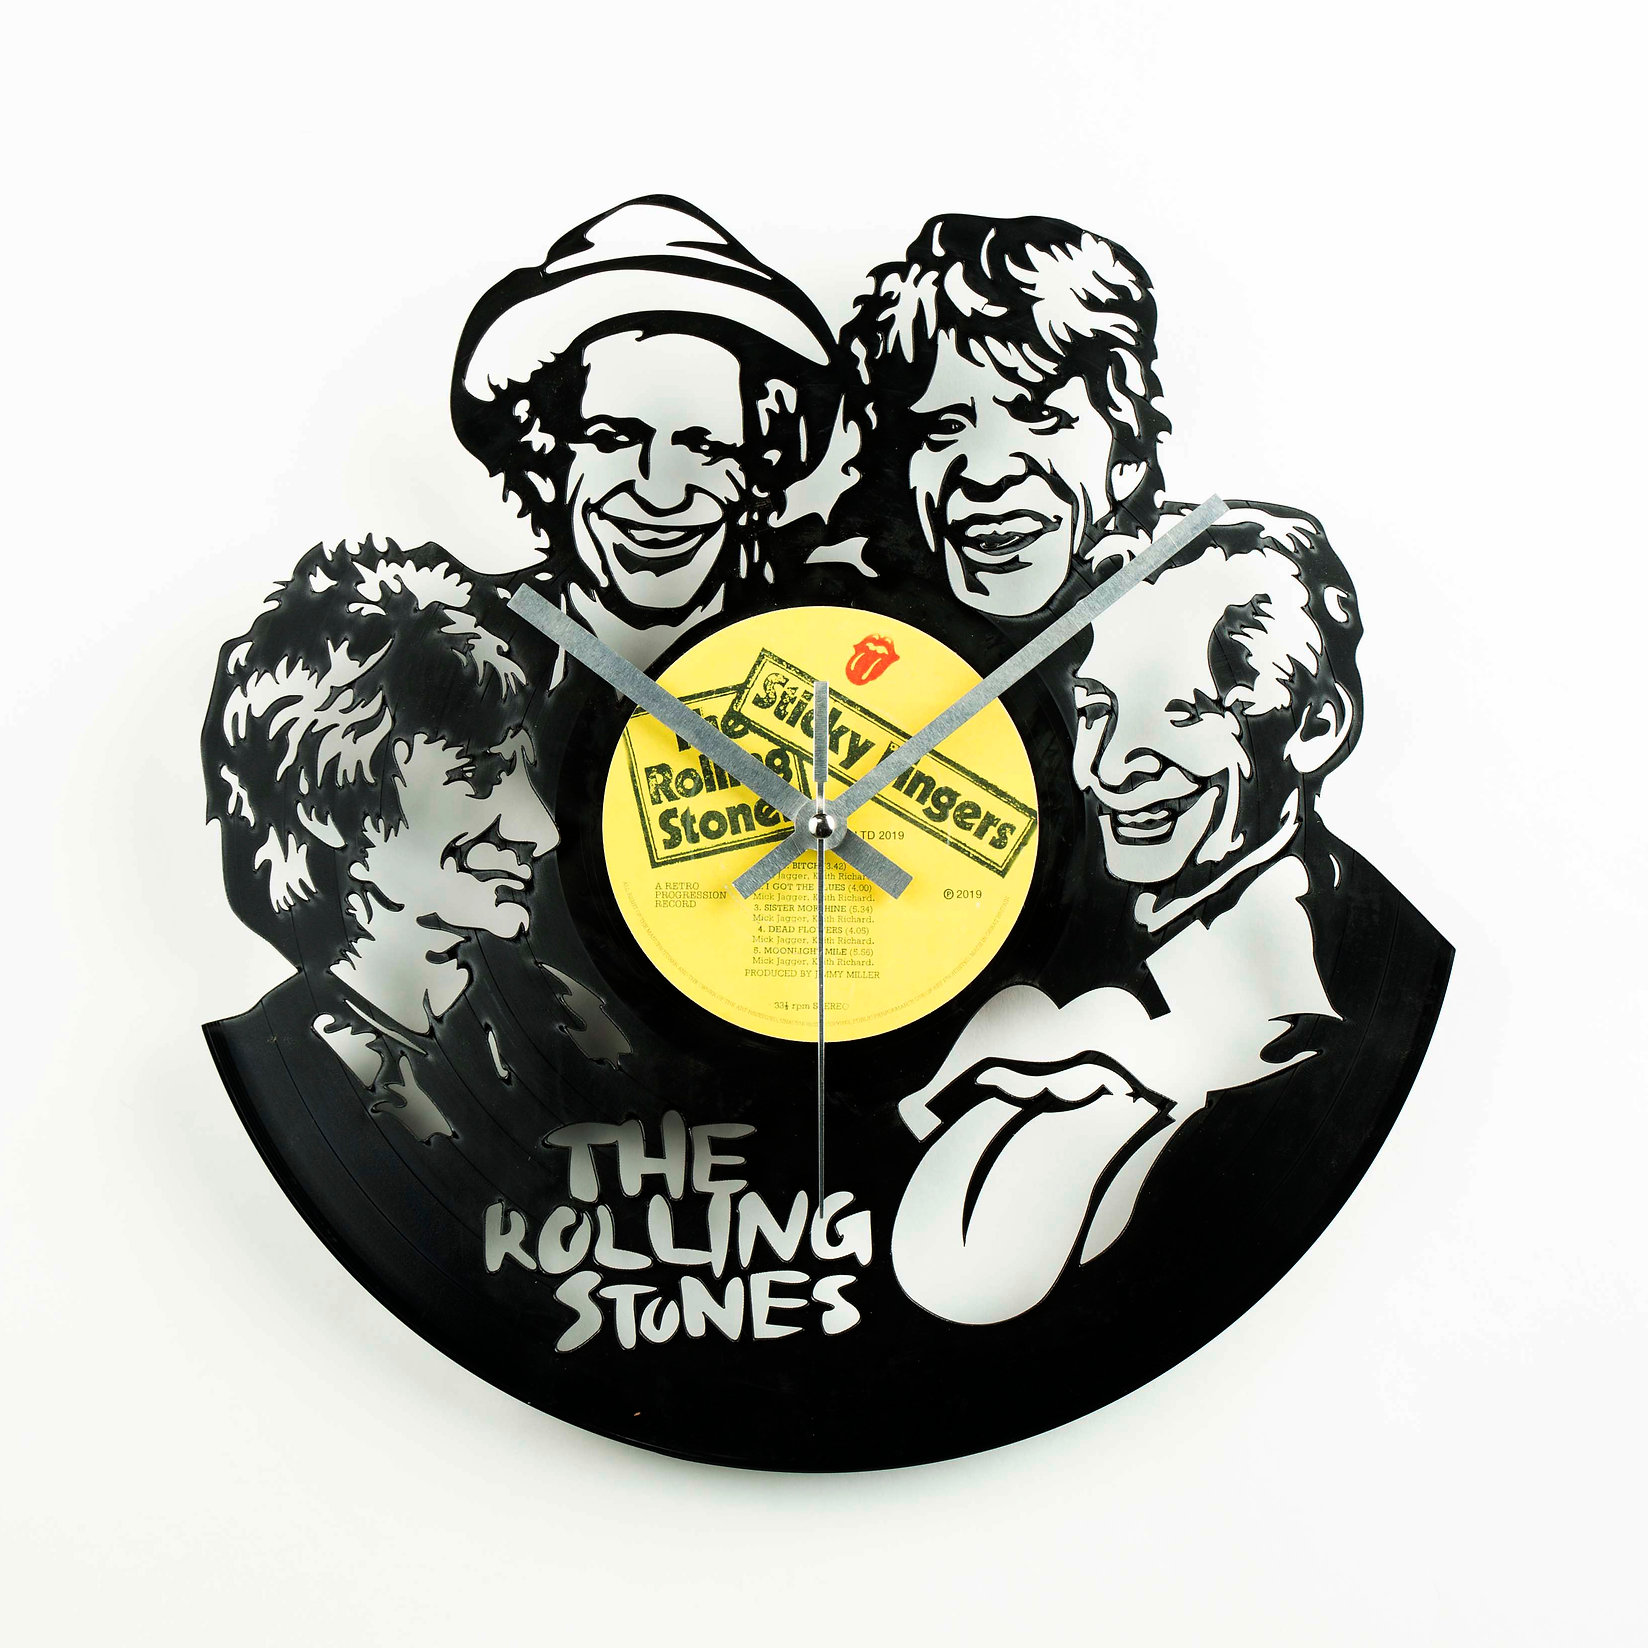 The Rolling Stones Band Vinyl Clock